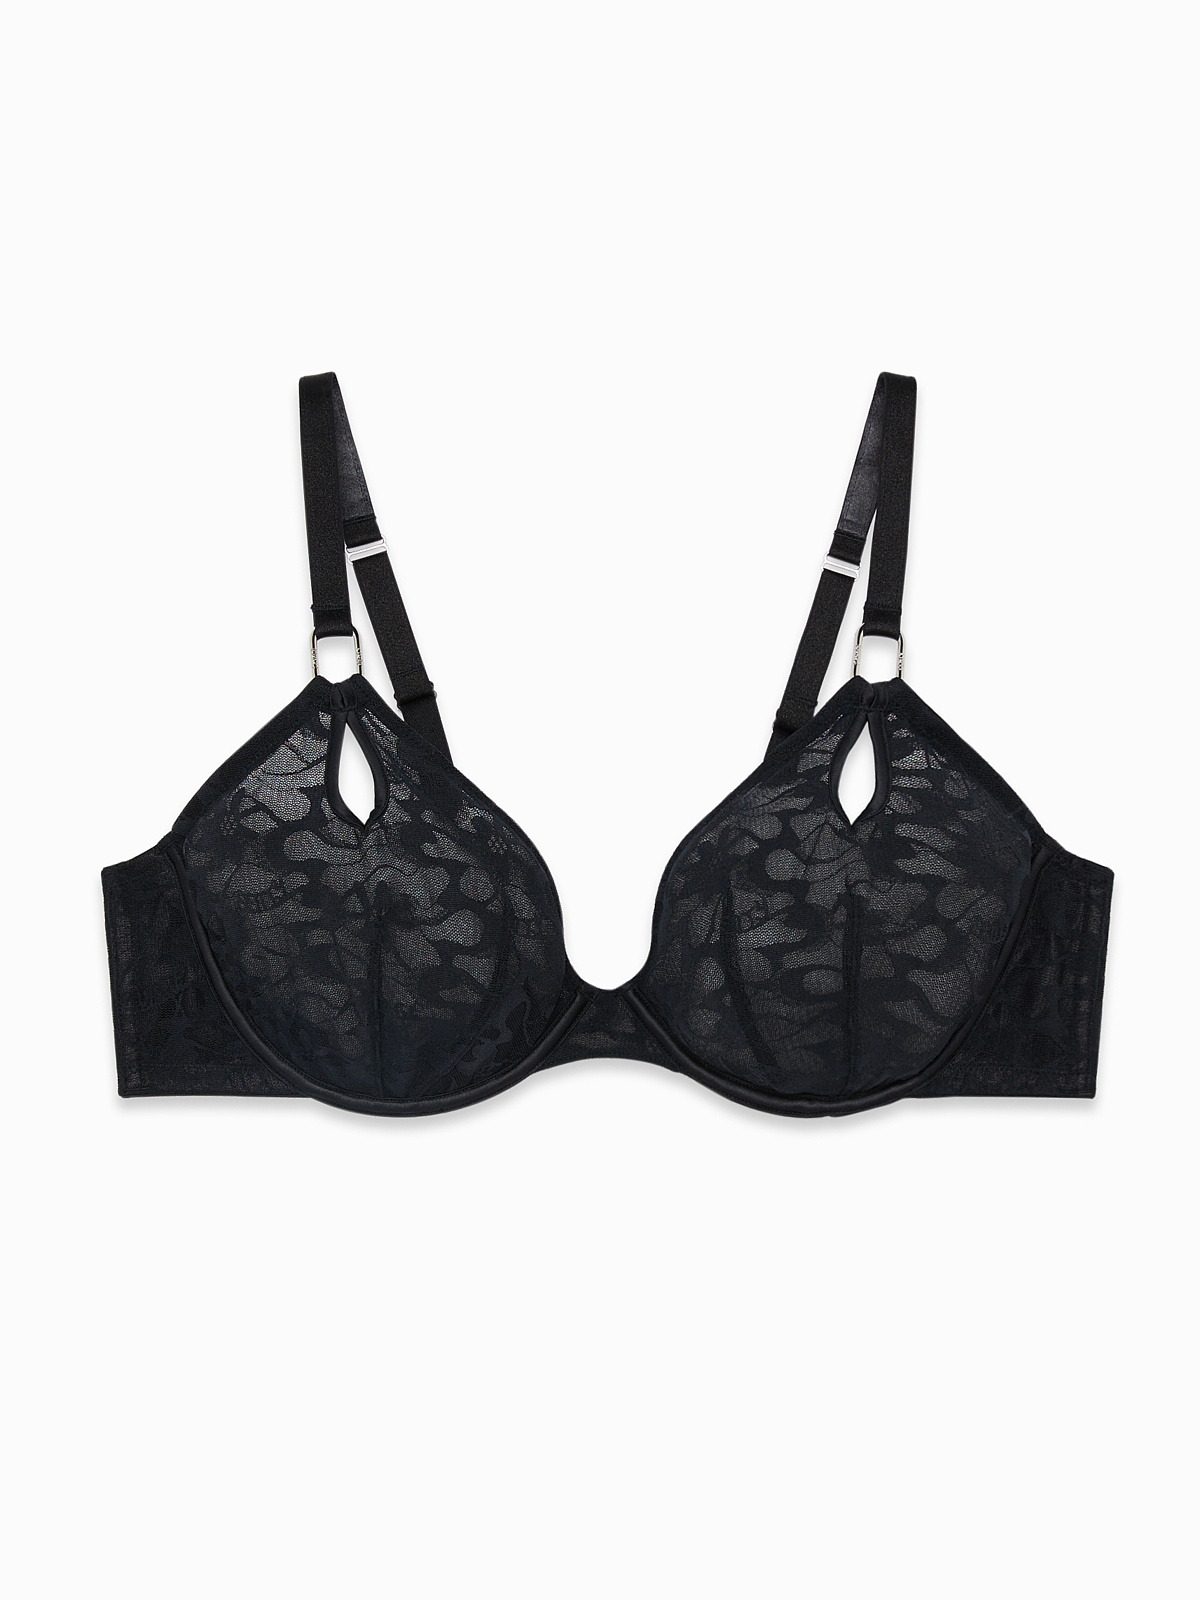 Buy online Black Lace Plunge Bra from lingerie for Women by Clovia